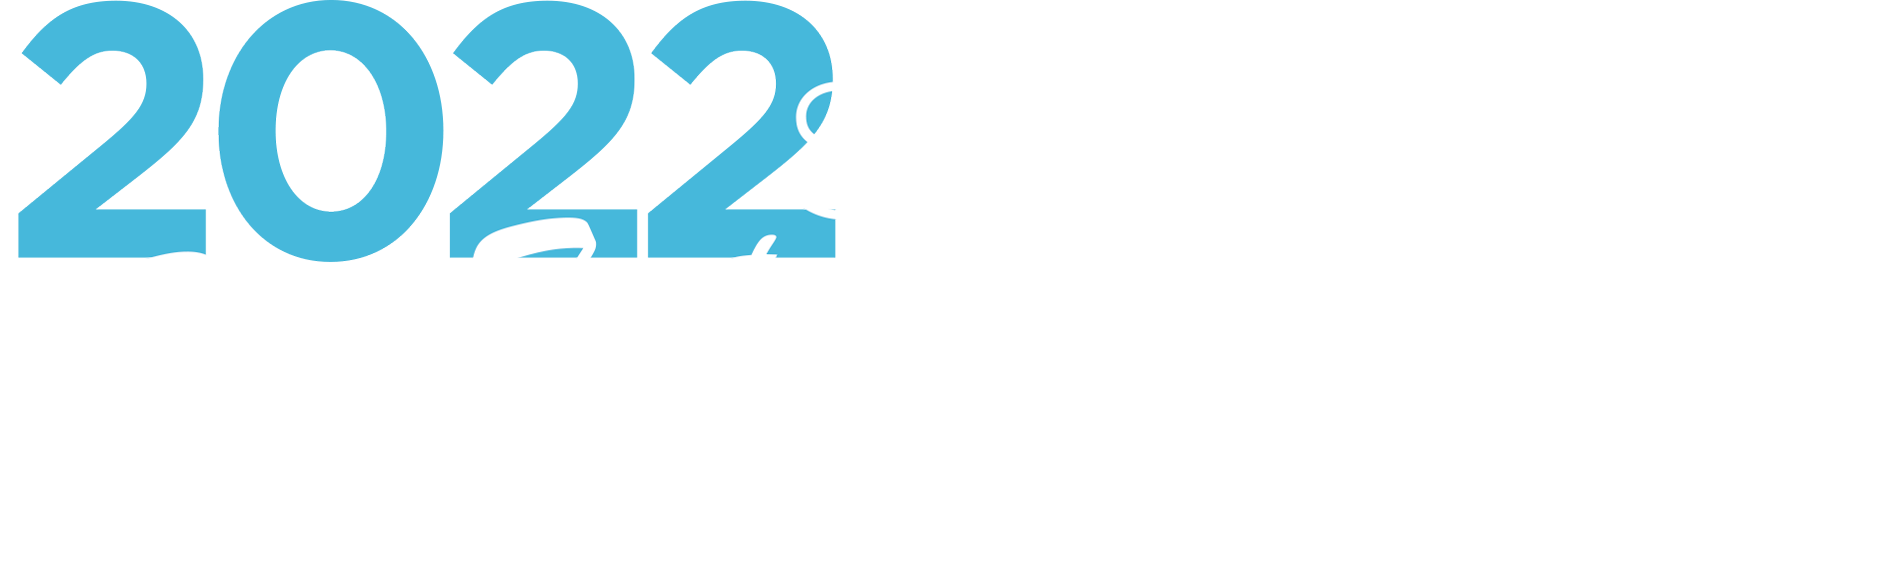 2022 Shootout: Boat Test Edition